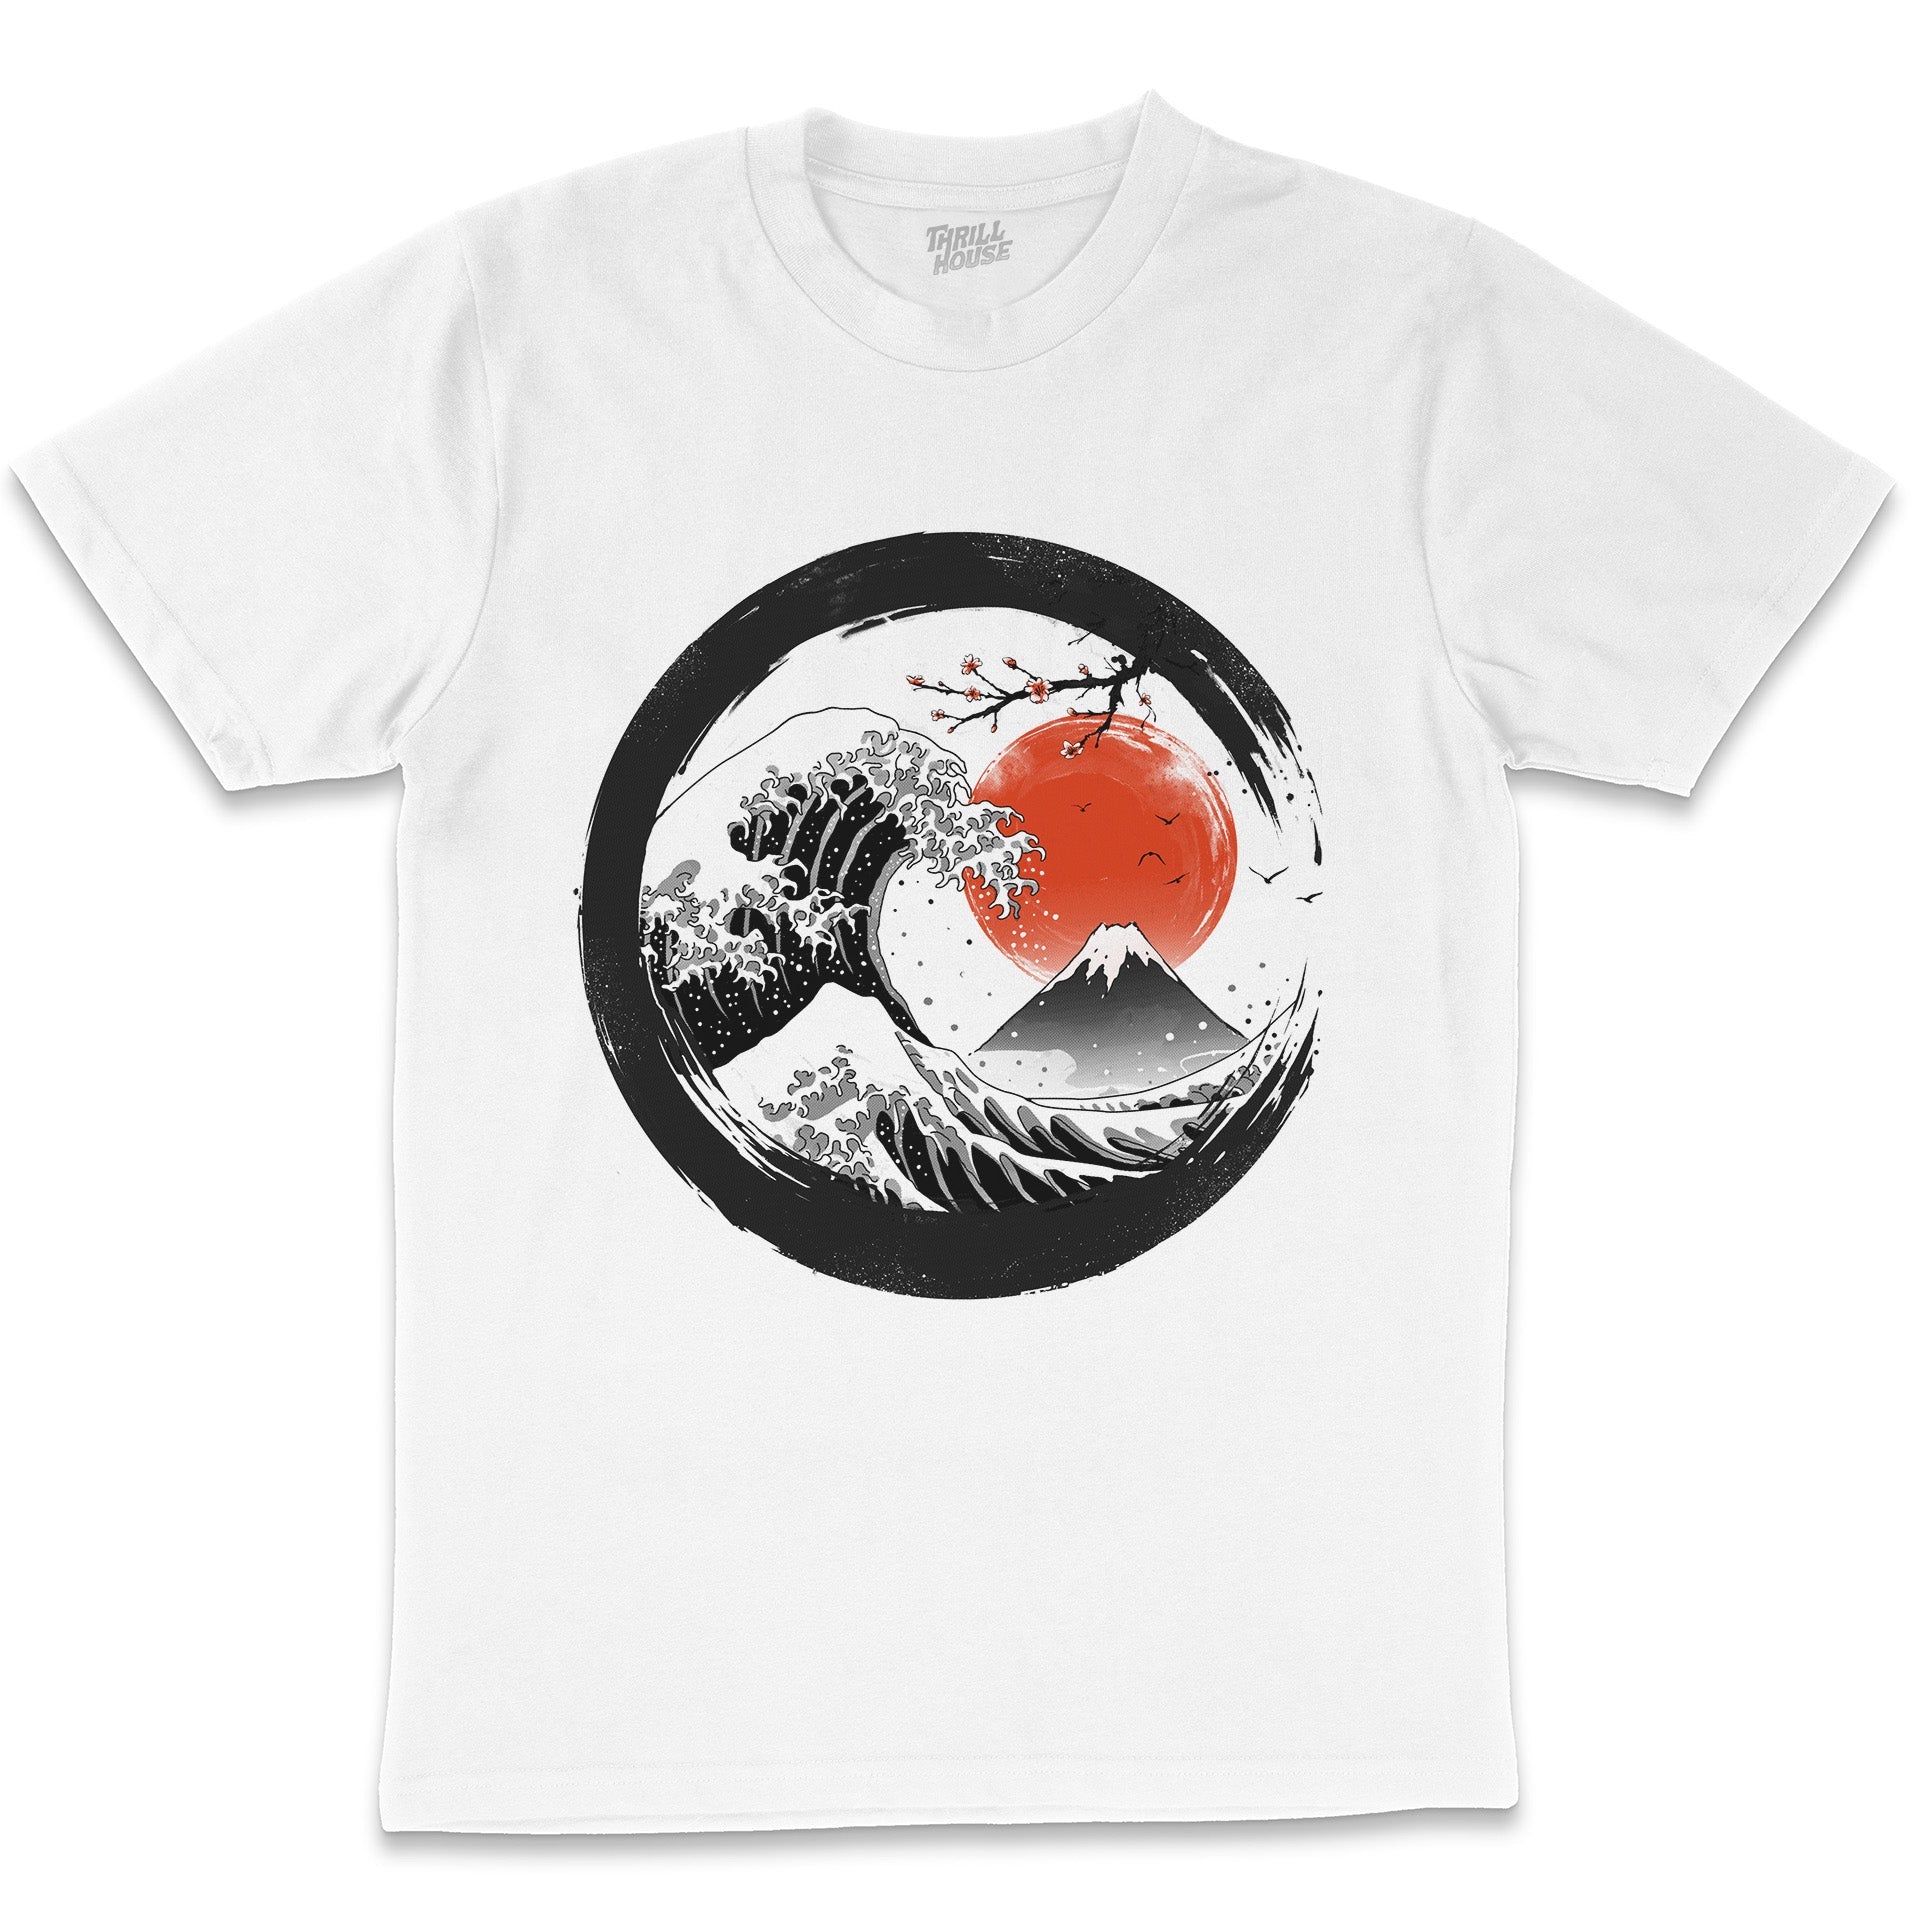 The Great Wave Of Kanagawa Inspired Sumi Wave Retro Artsy Japanese Inspired Cotton T-Shirt